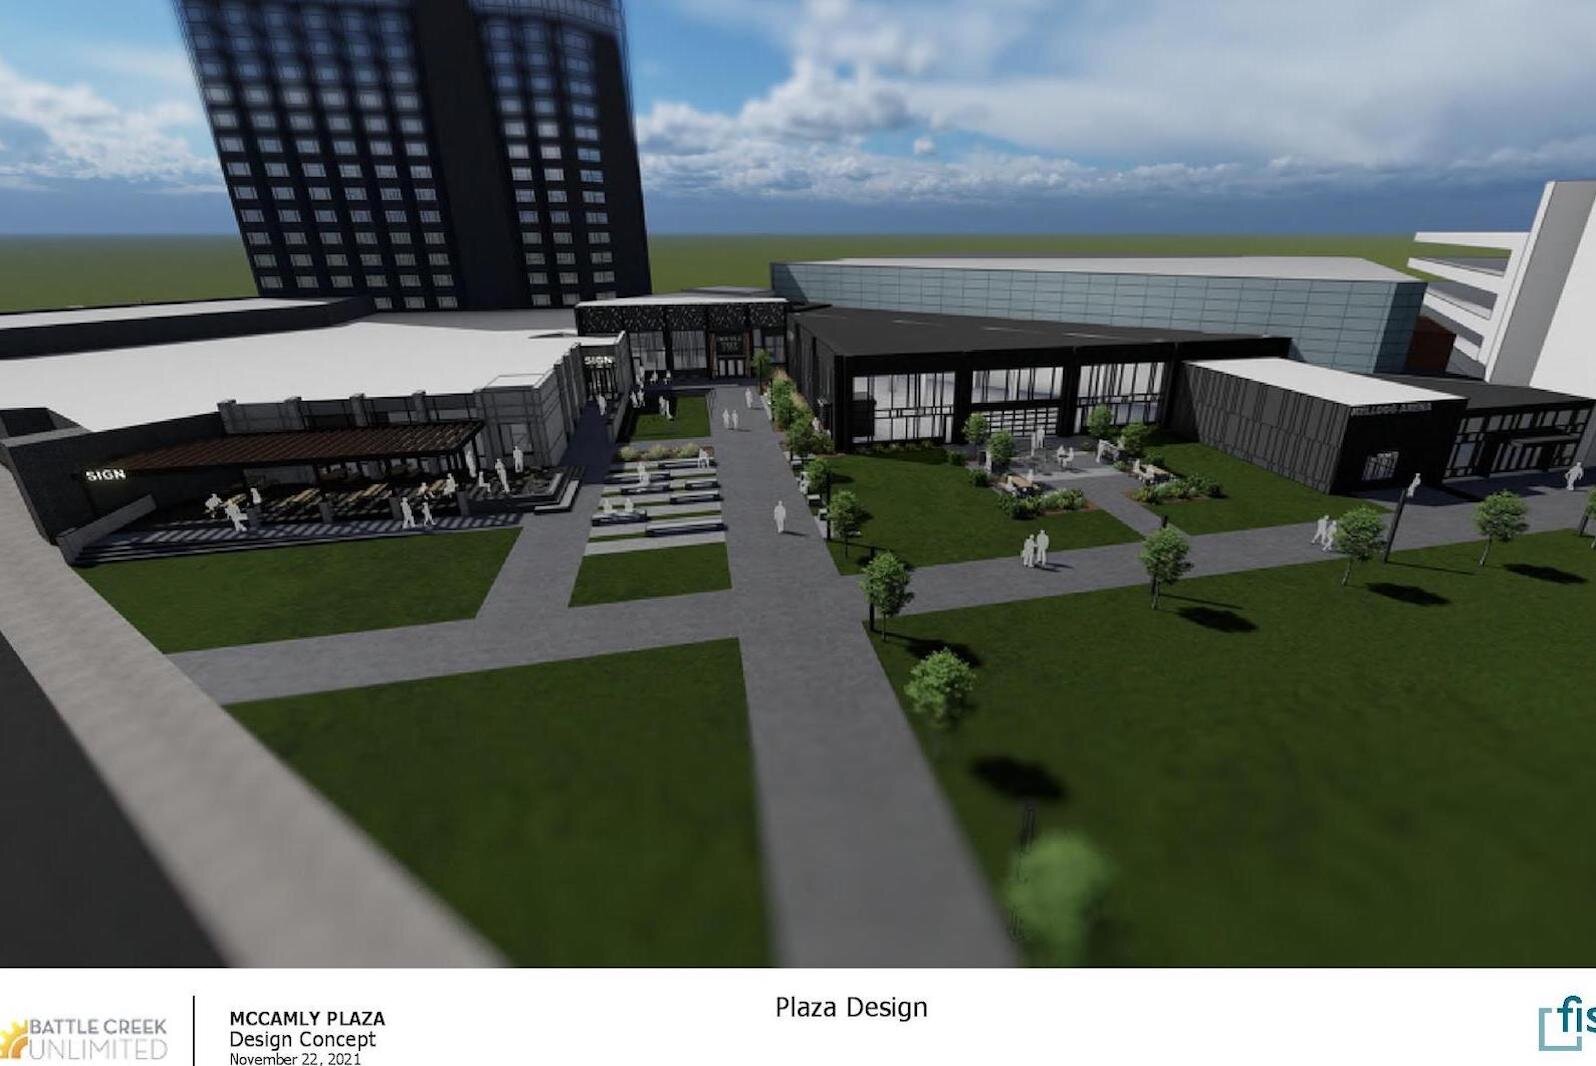 The plaza design as shown in a design concept.